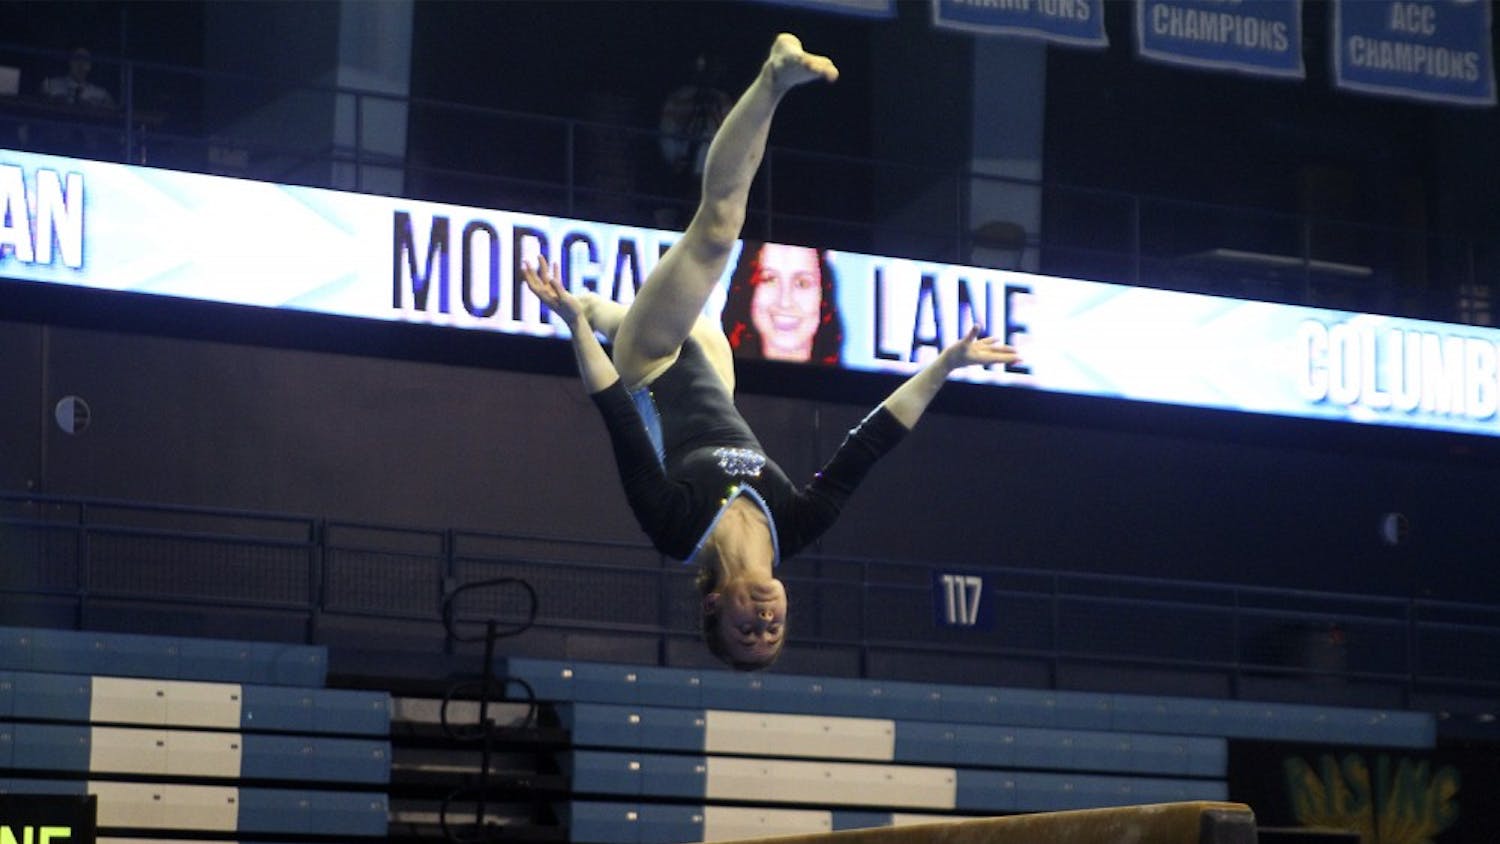 Women's Gymnastics
Morgan Lane, Beam